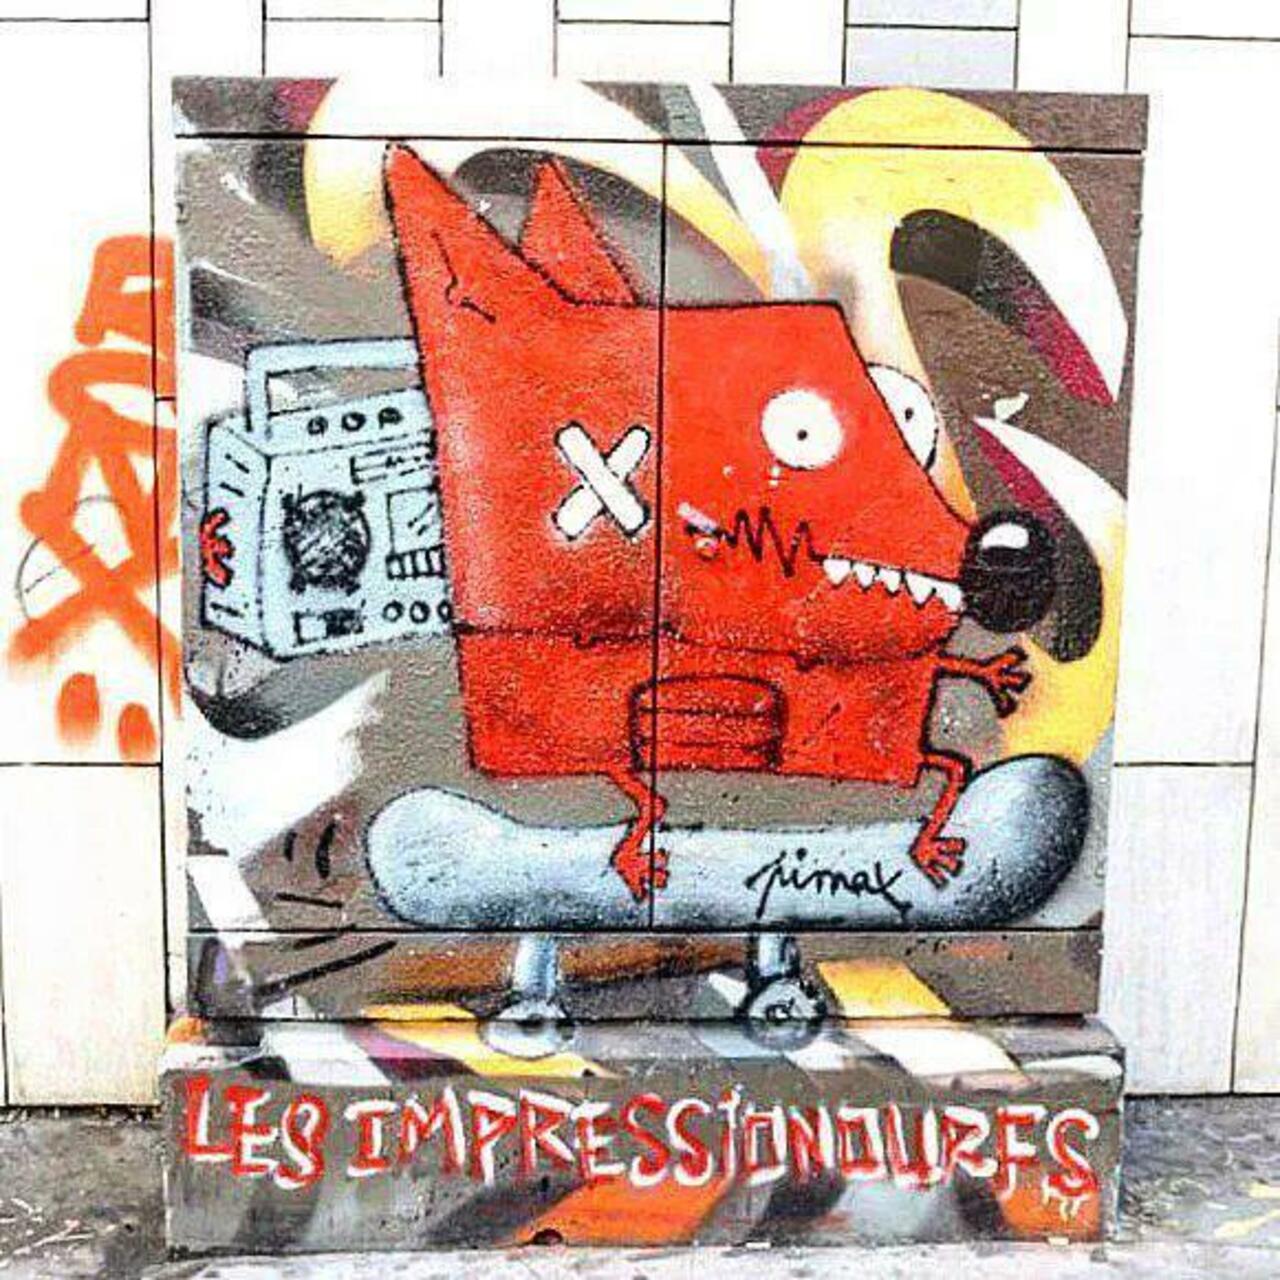 #Paris #graffiti photo by @senyorerre http://ift.tt/1M2YGHo #StreetArt https://t.co/Wkp1VIY3Rq